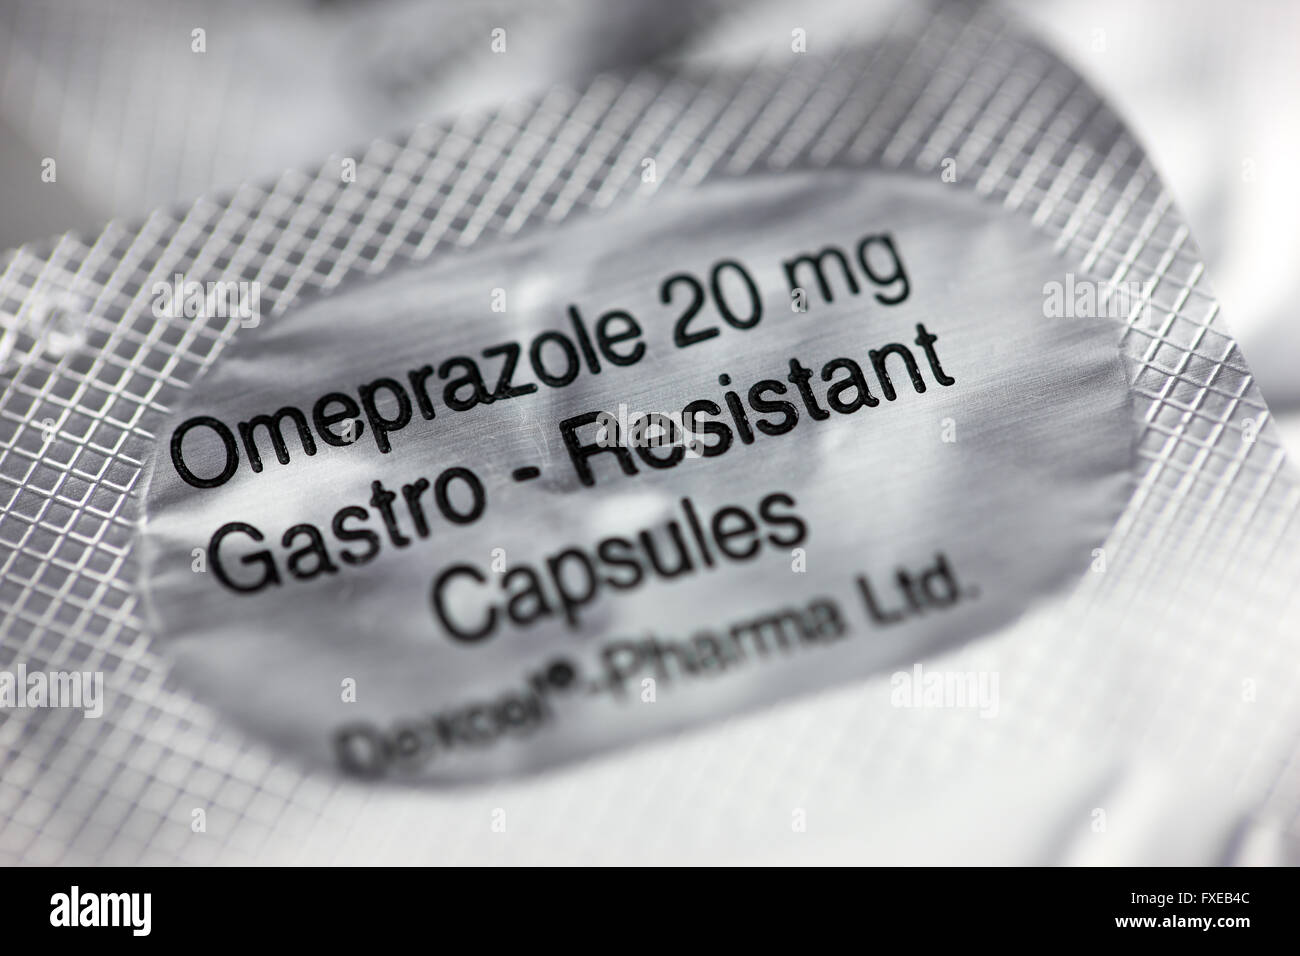 Omeprazole capsules for gastroesophageal reflux disease (GERD) Stock Photo